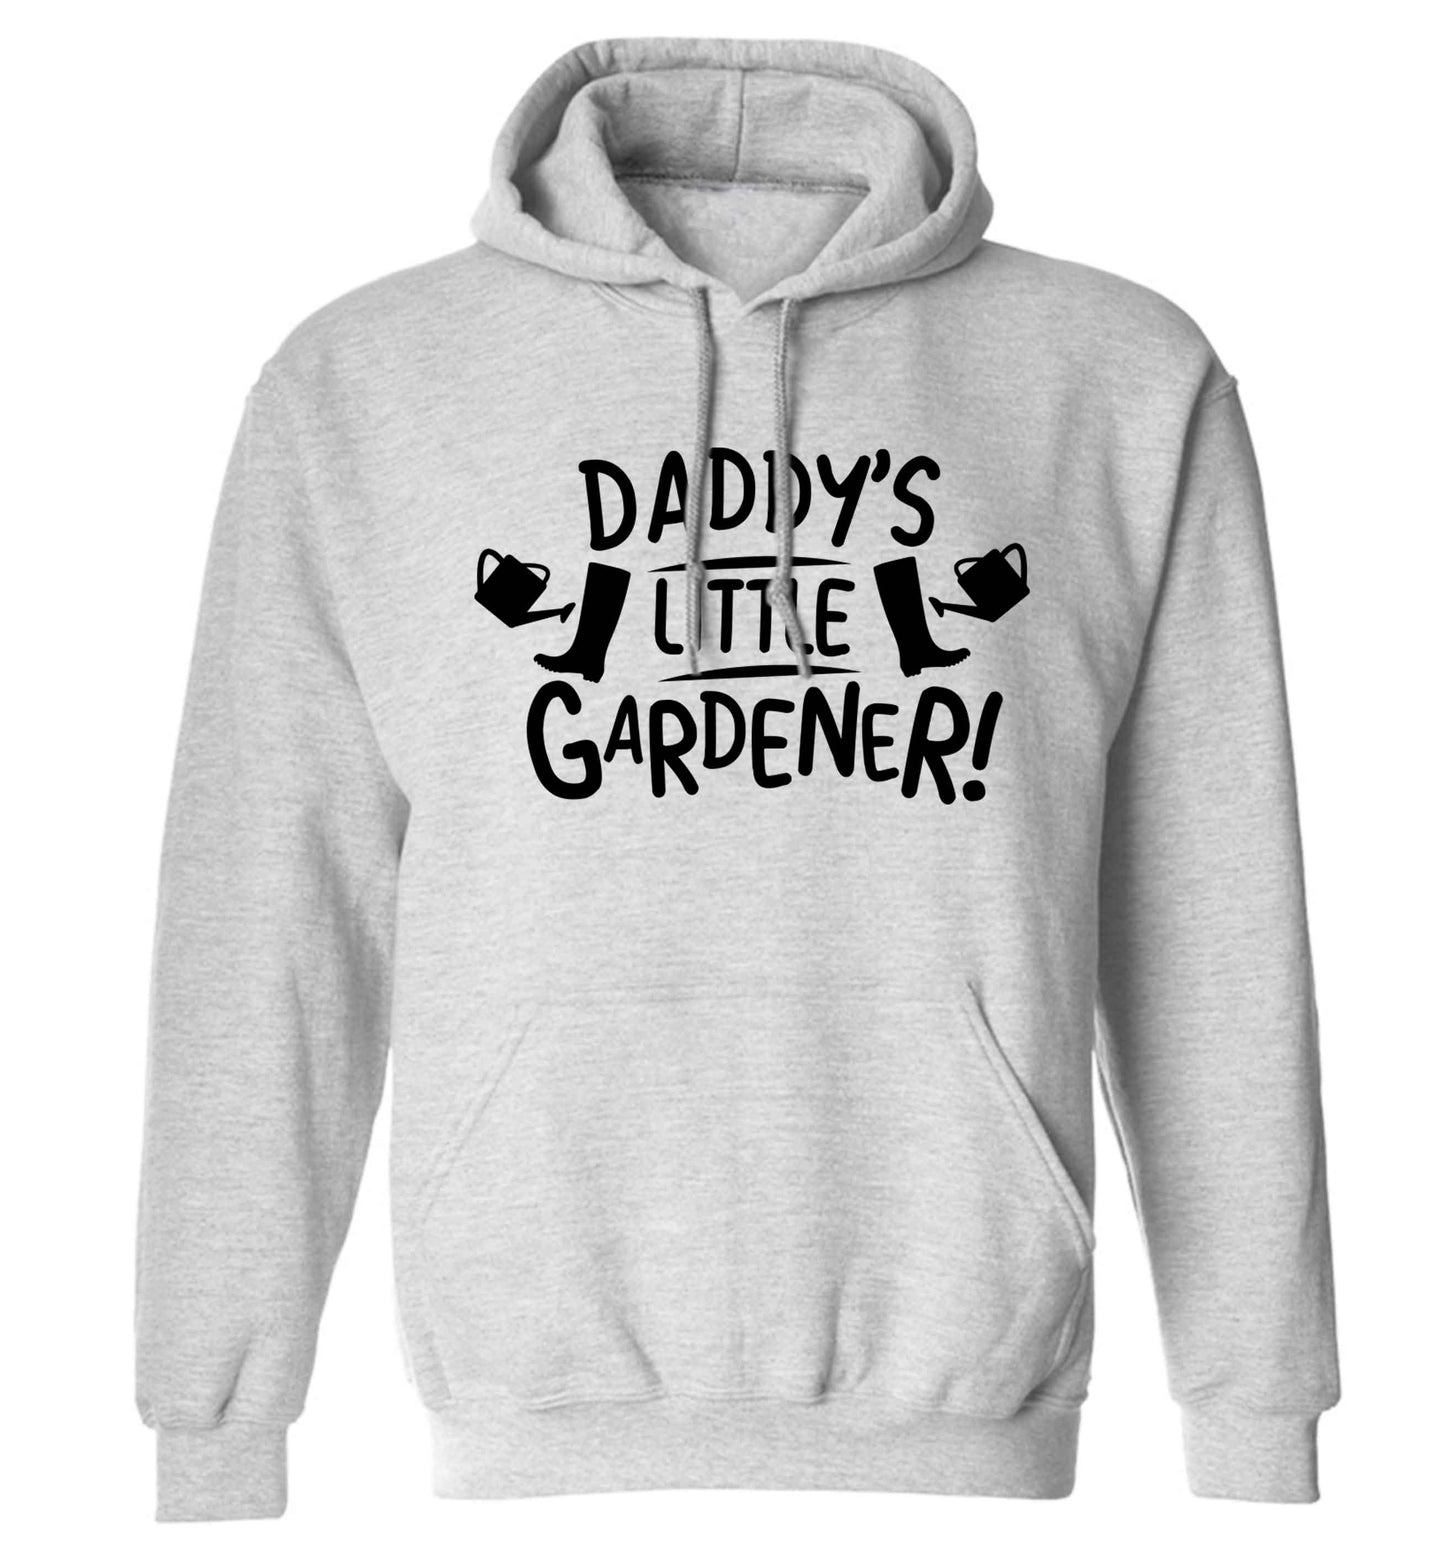 Daddy's little gardener adults unisex grey hoodie 2XL